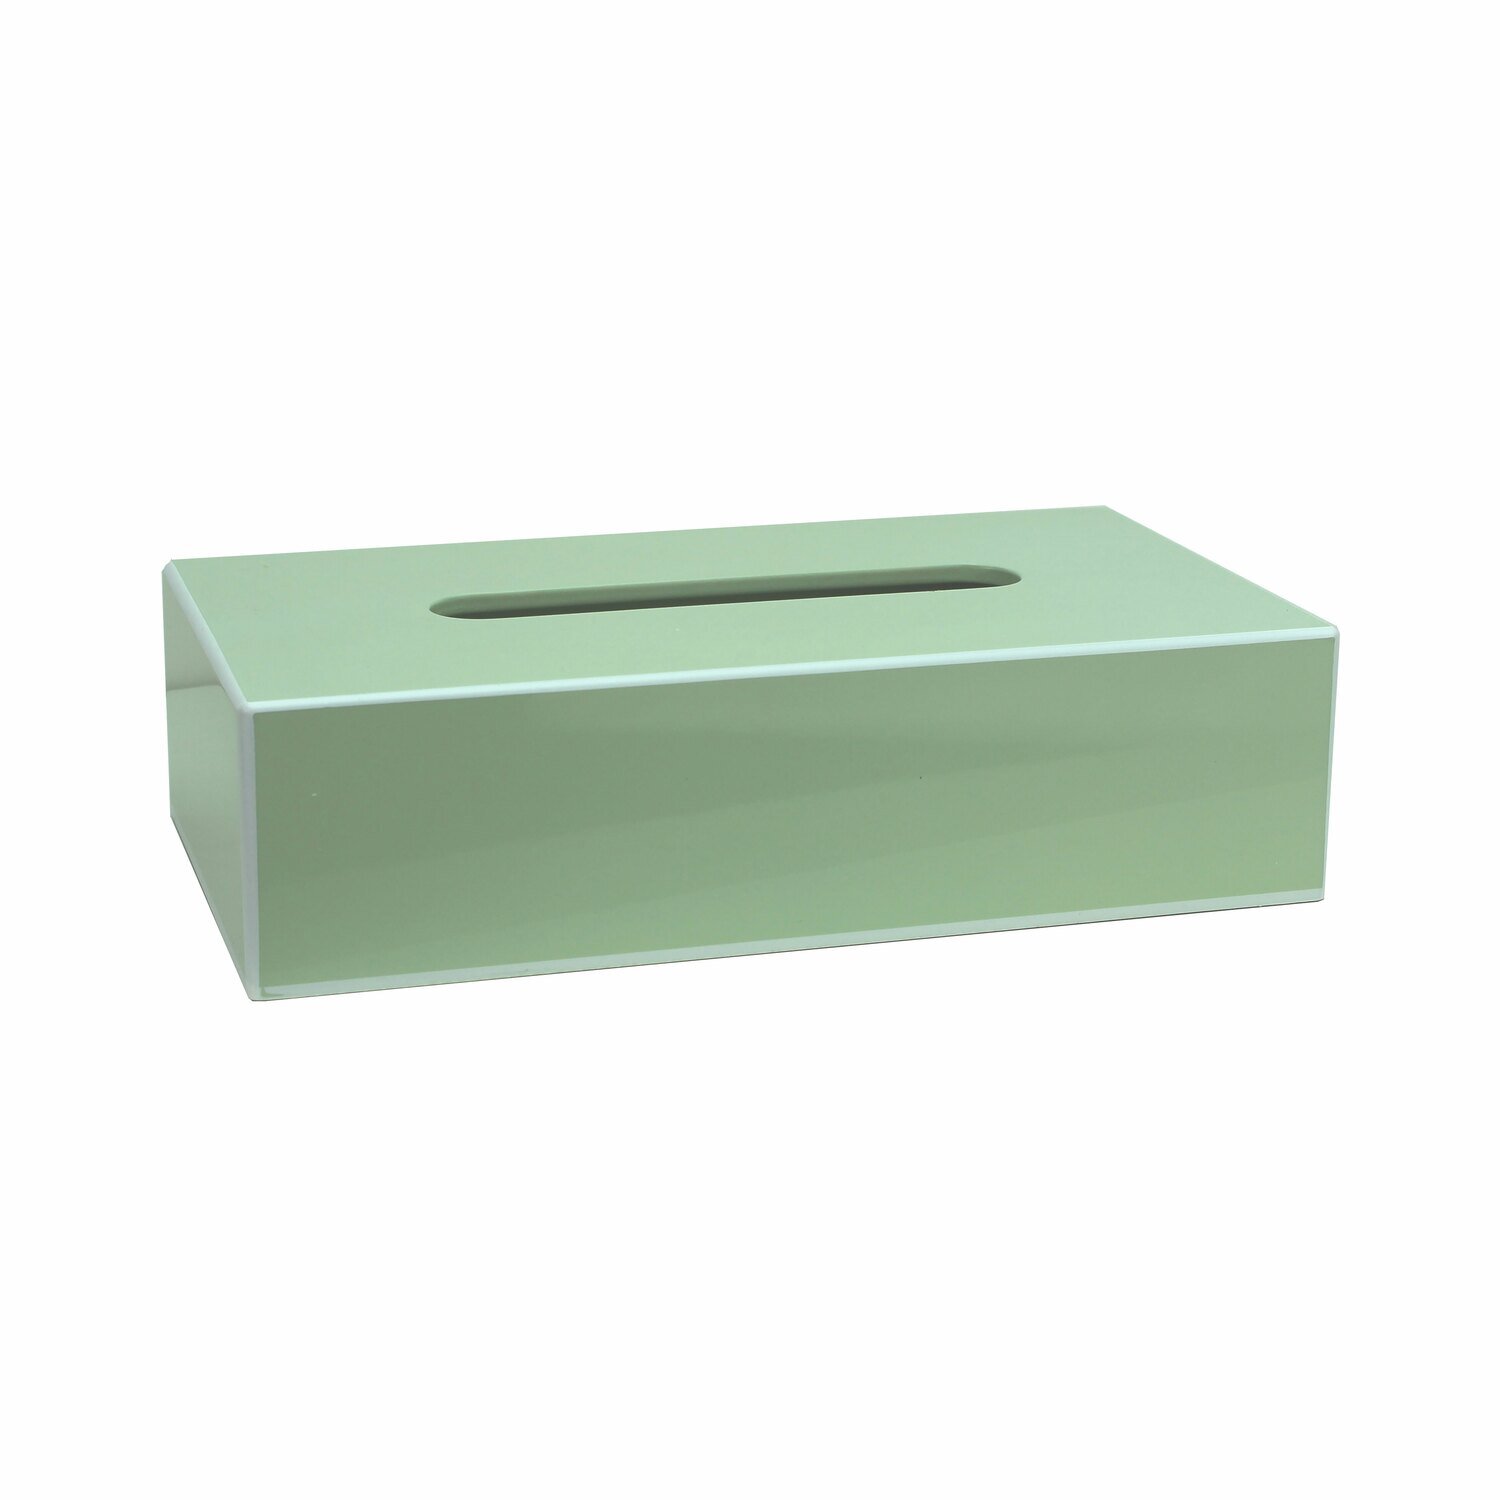 Addison Ross Tissue Box 10x4 Sage Green Lacquer TB2502